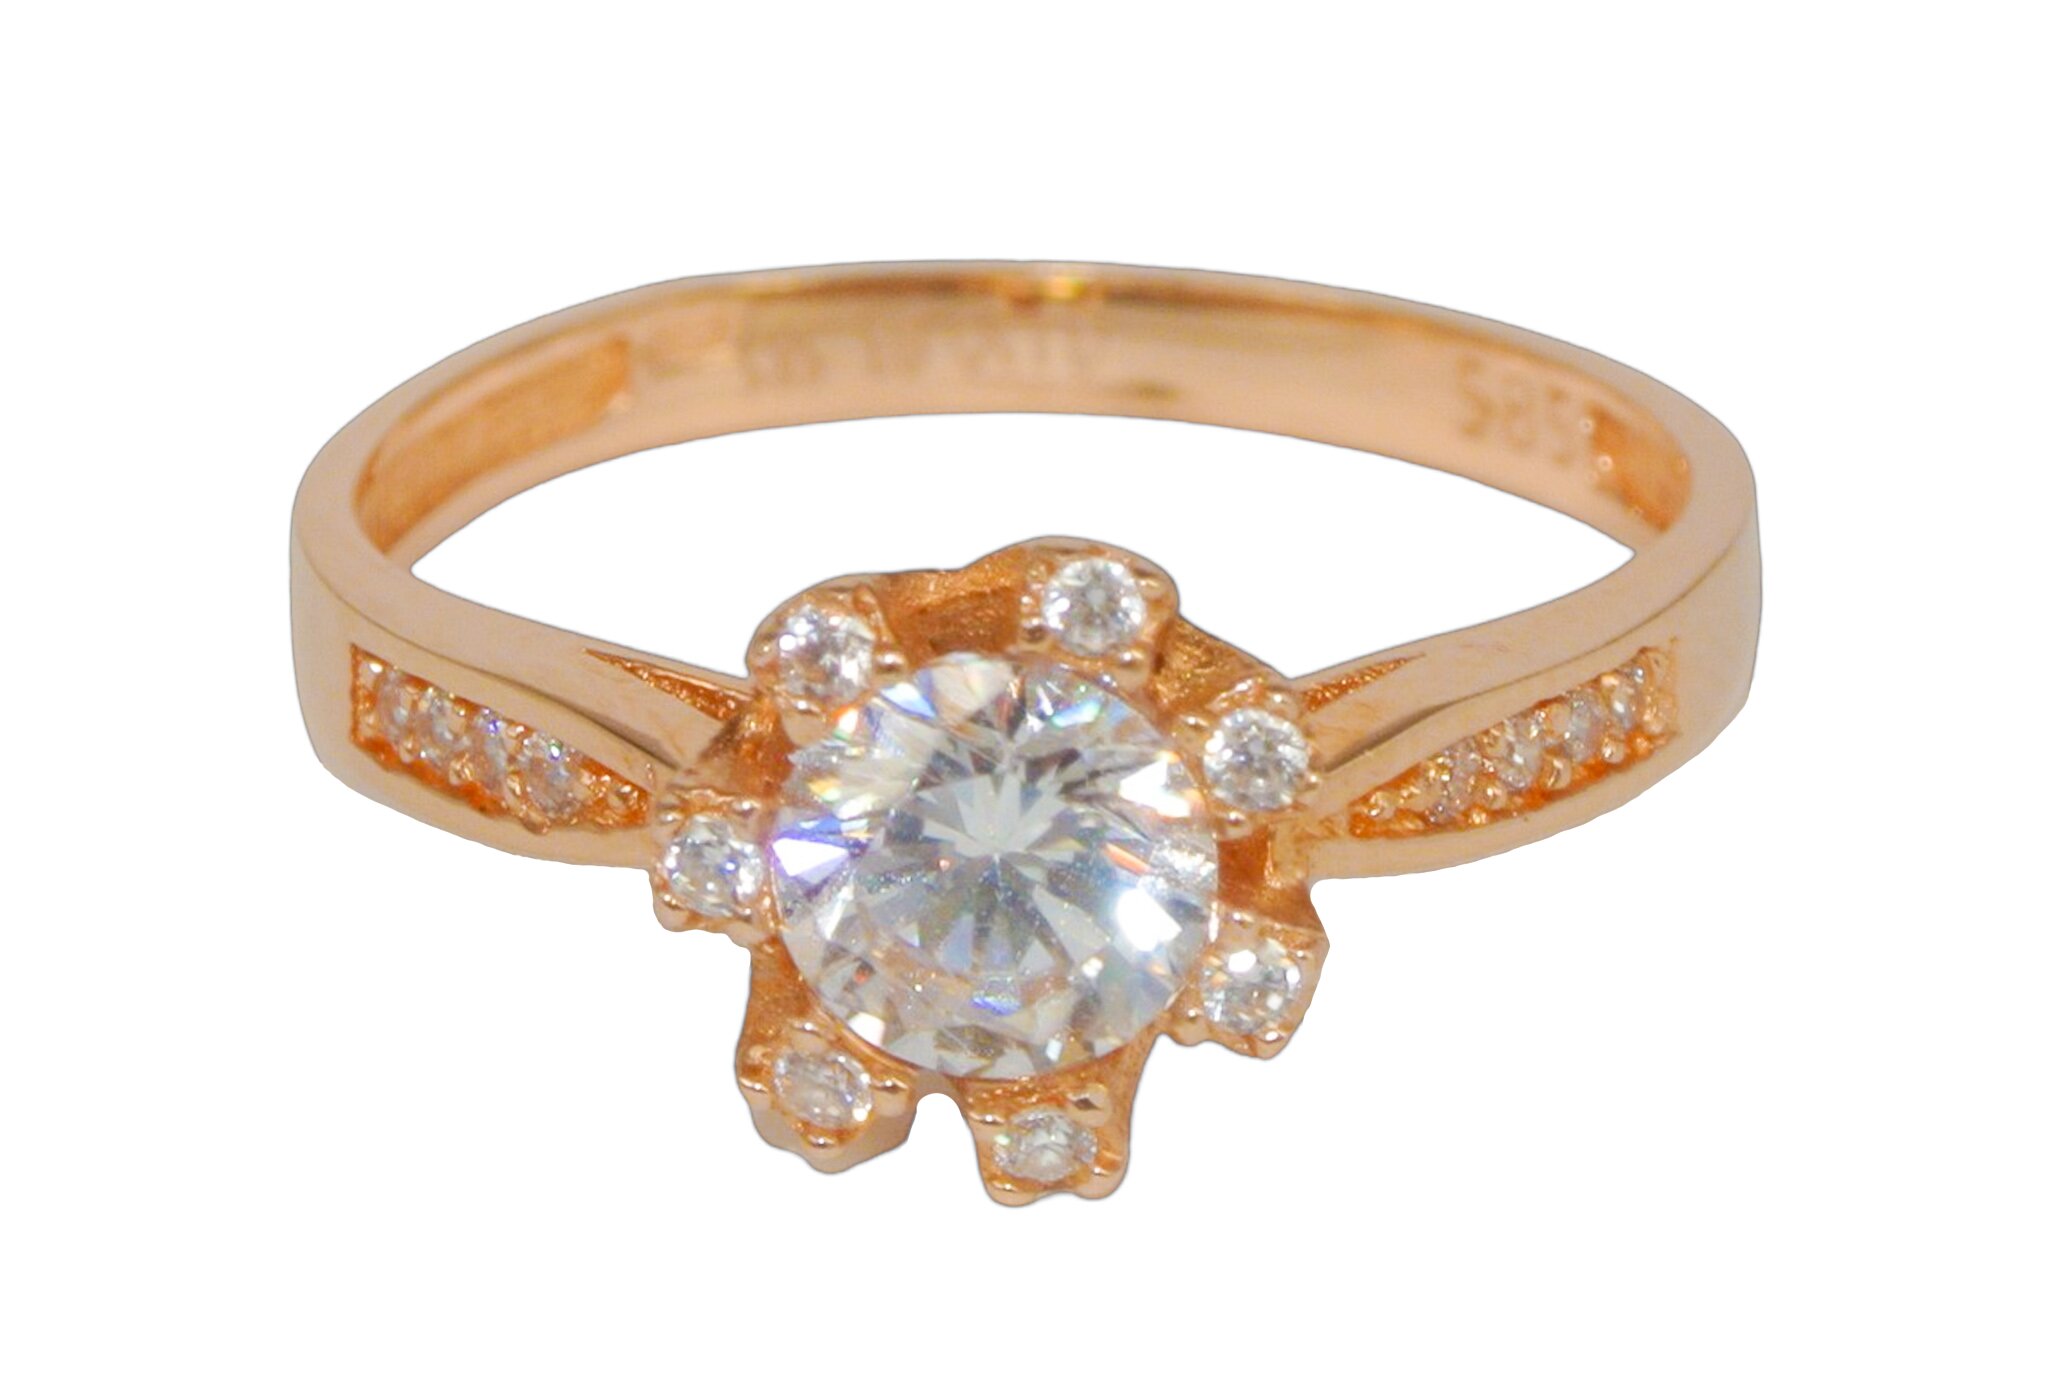 Elegante anillo realizado en oro rosa con circonitas